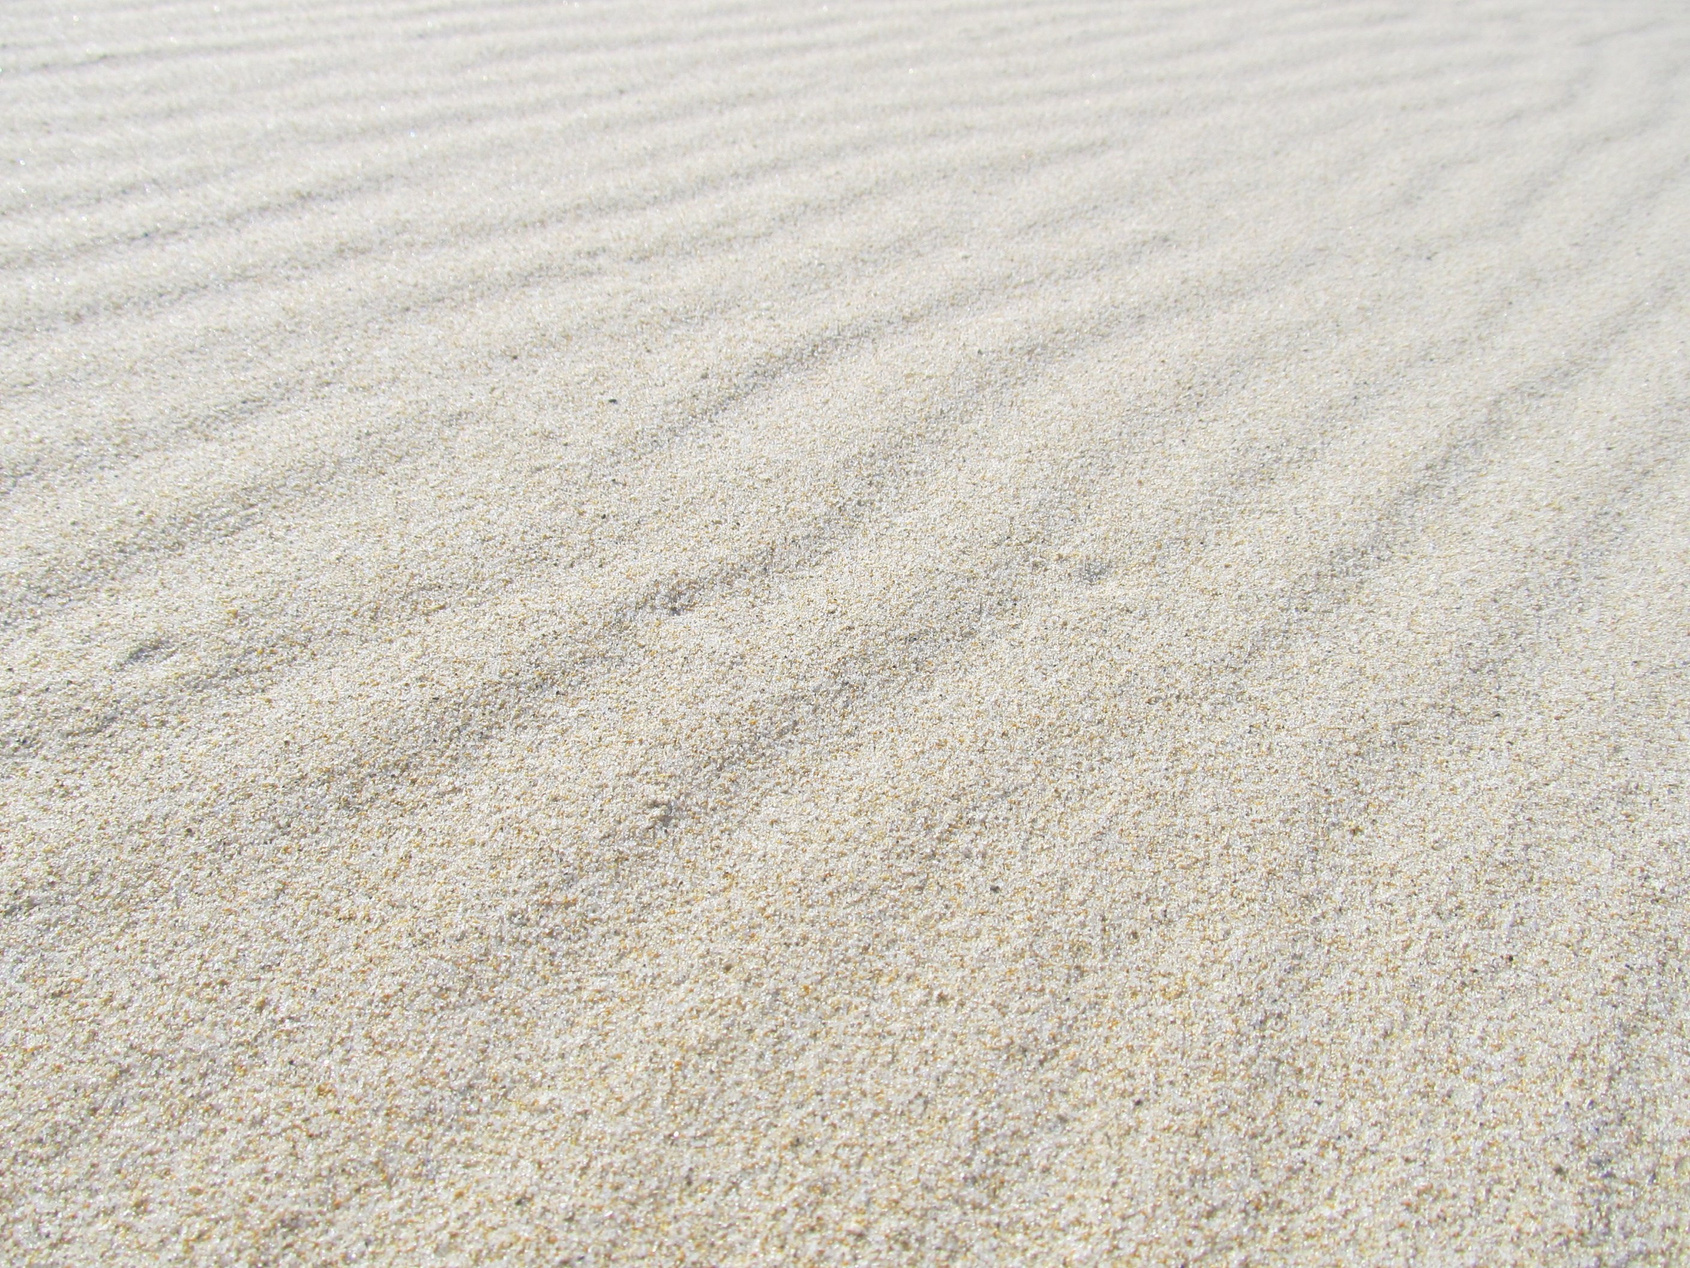 Sand, Beach, White, Sand Beach, Grains Of Sand, Texture